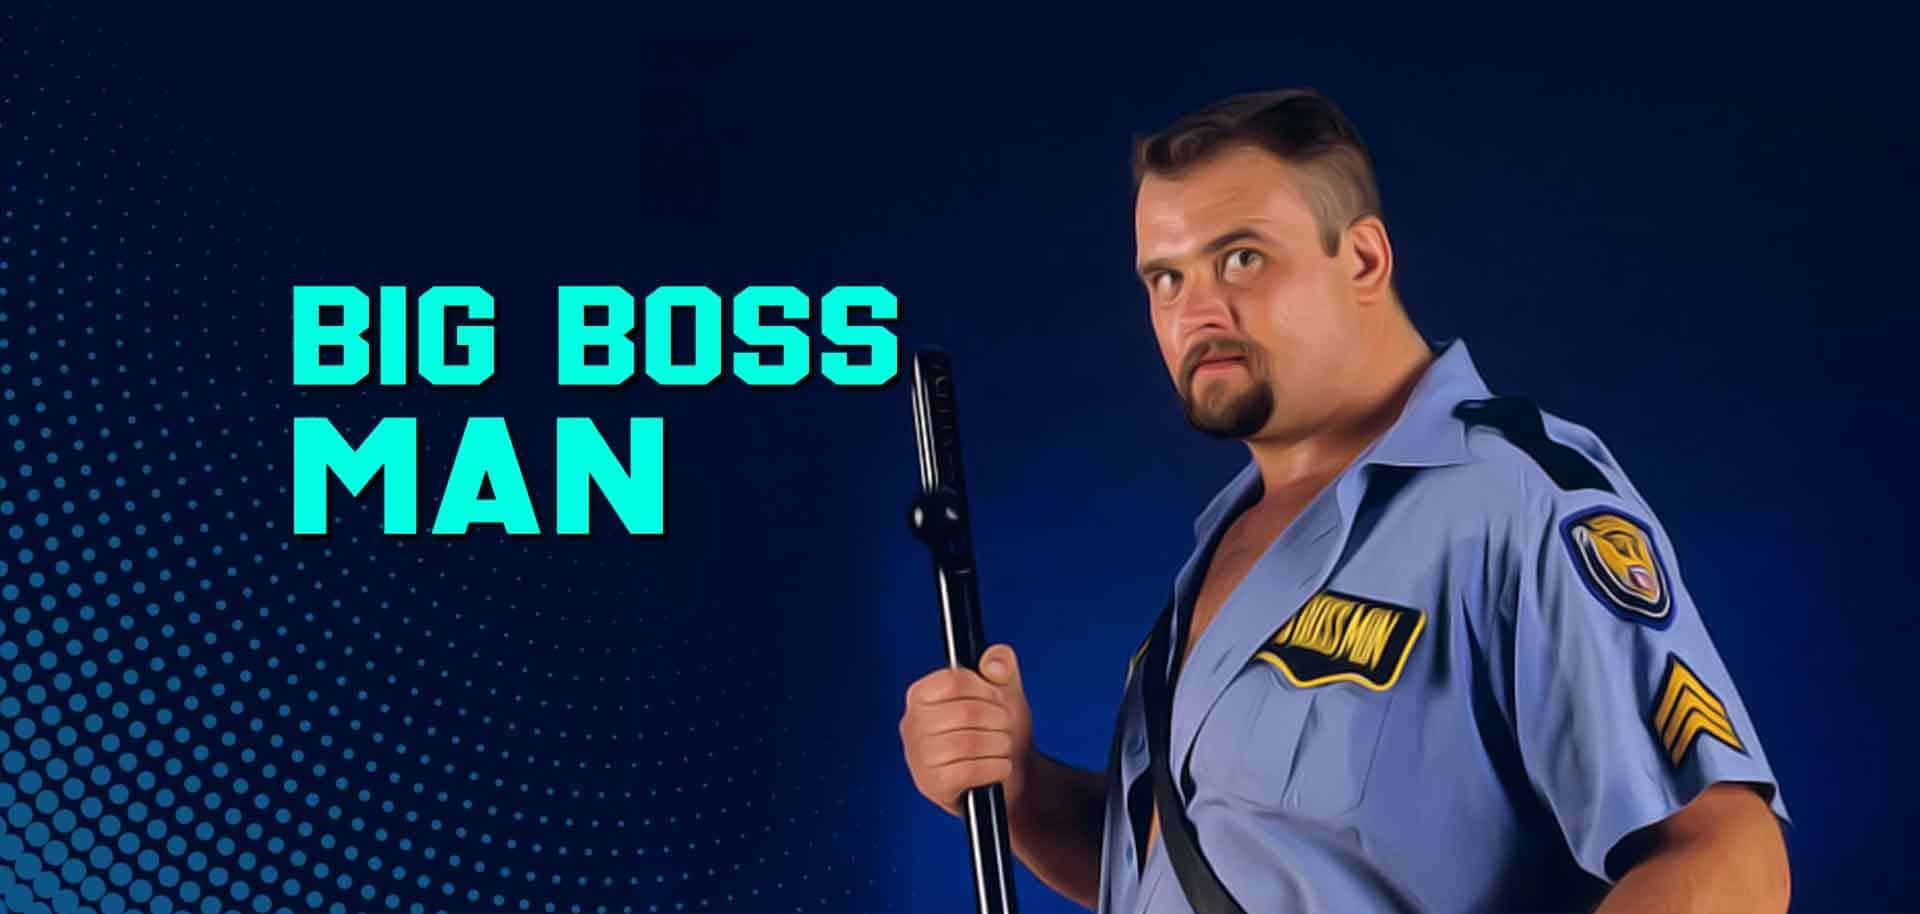 Iconic American Wrestler, Big Boss Man, in Action Wallpaper